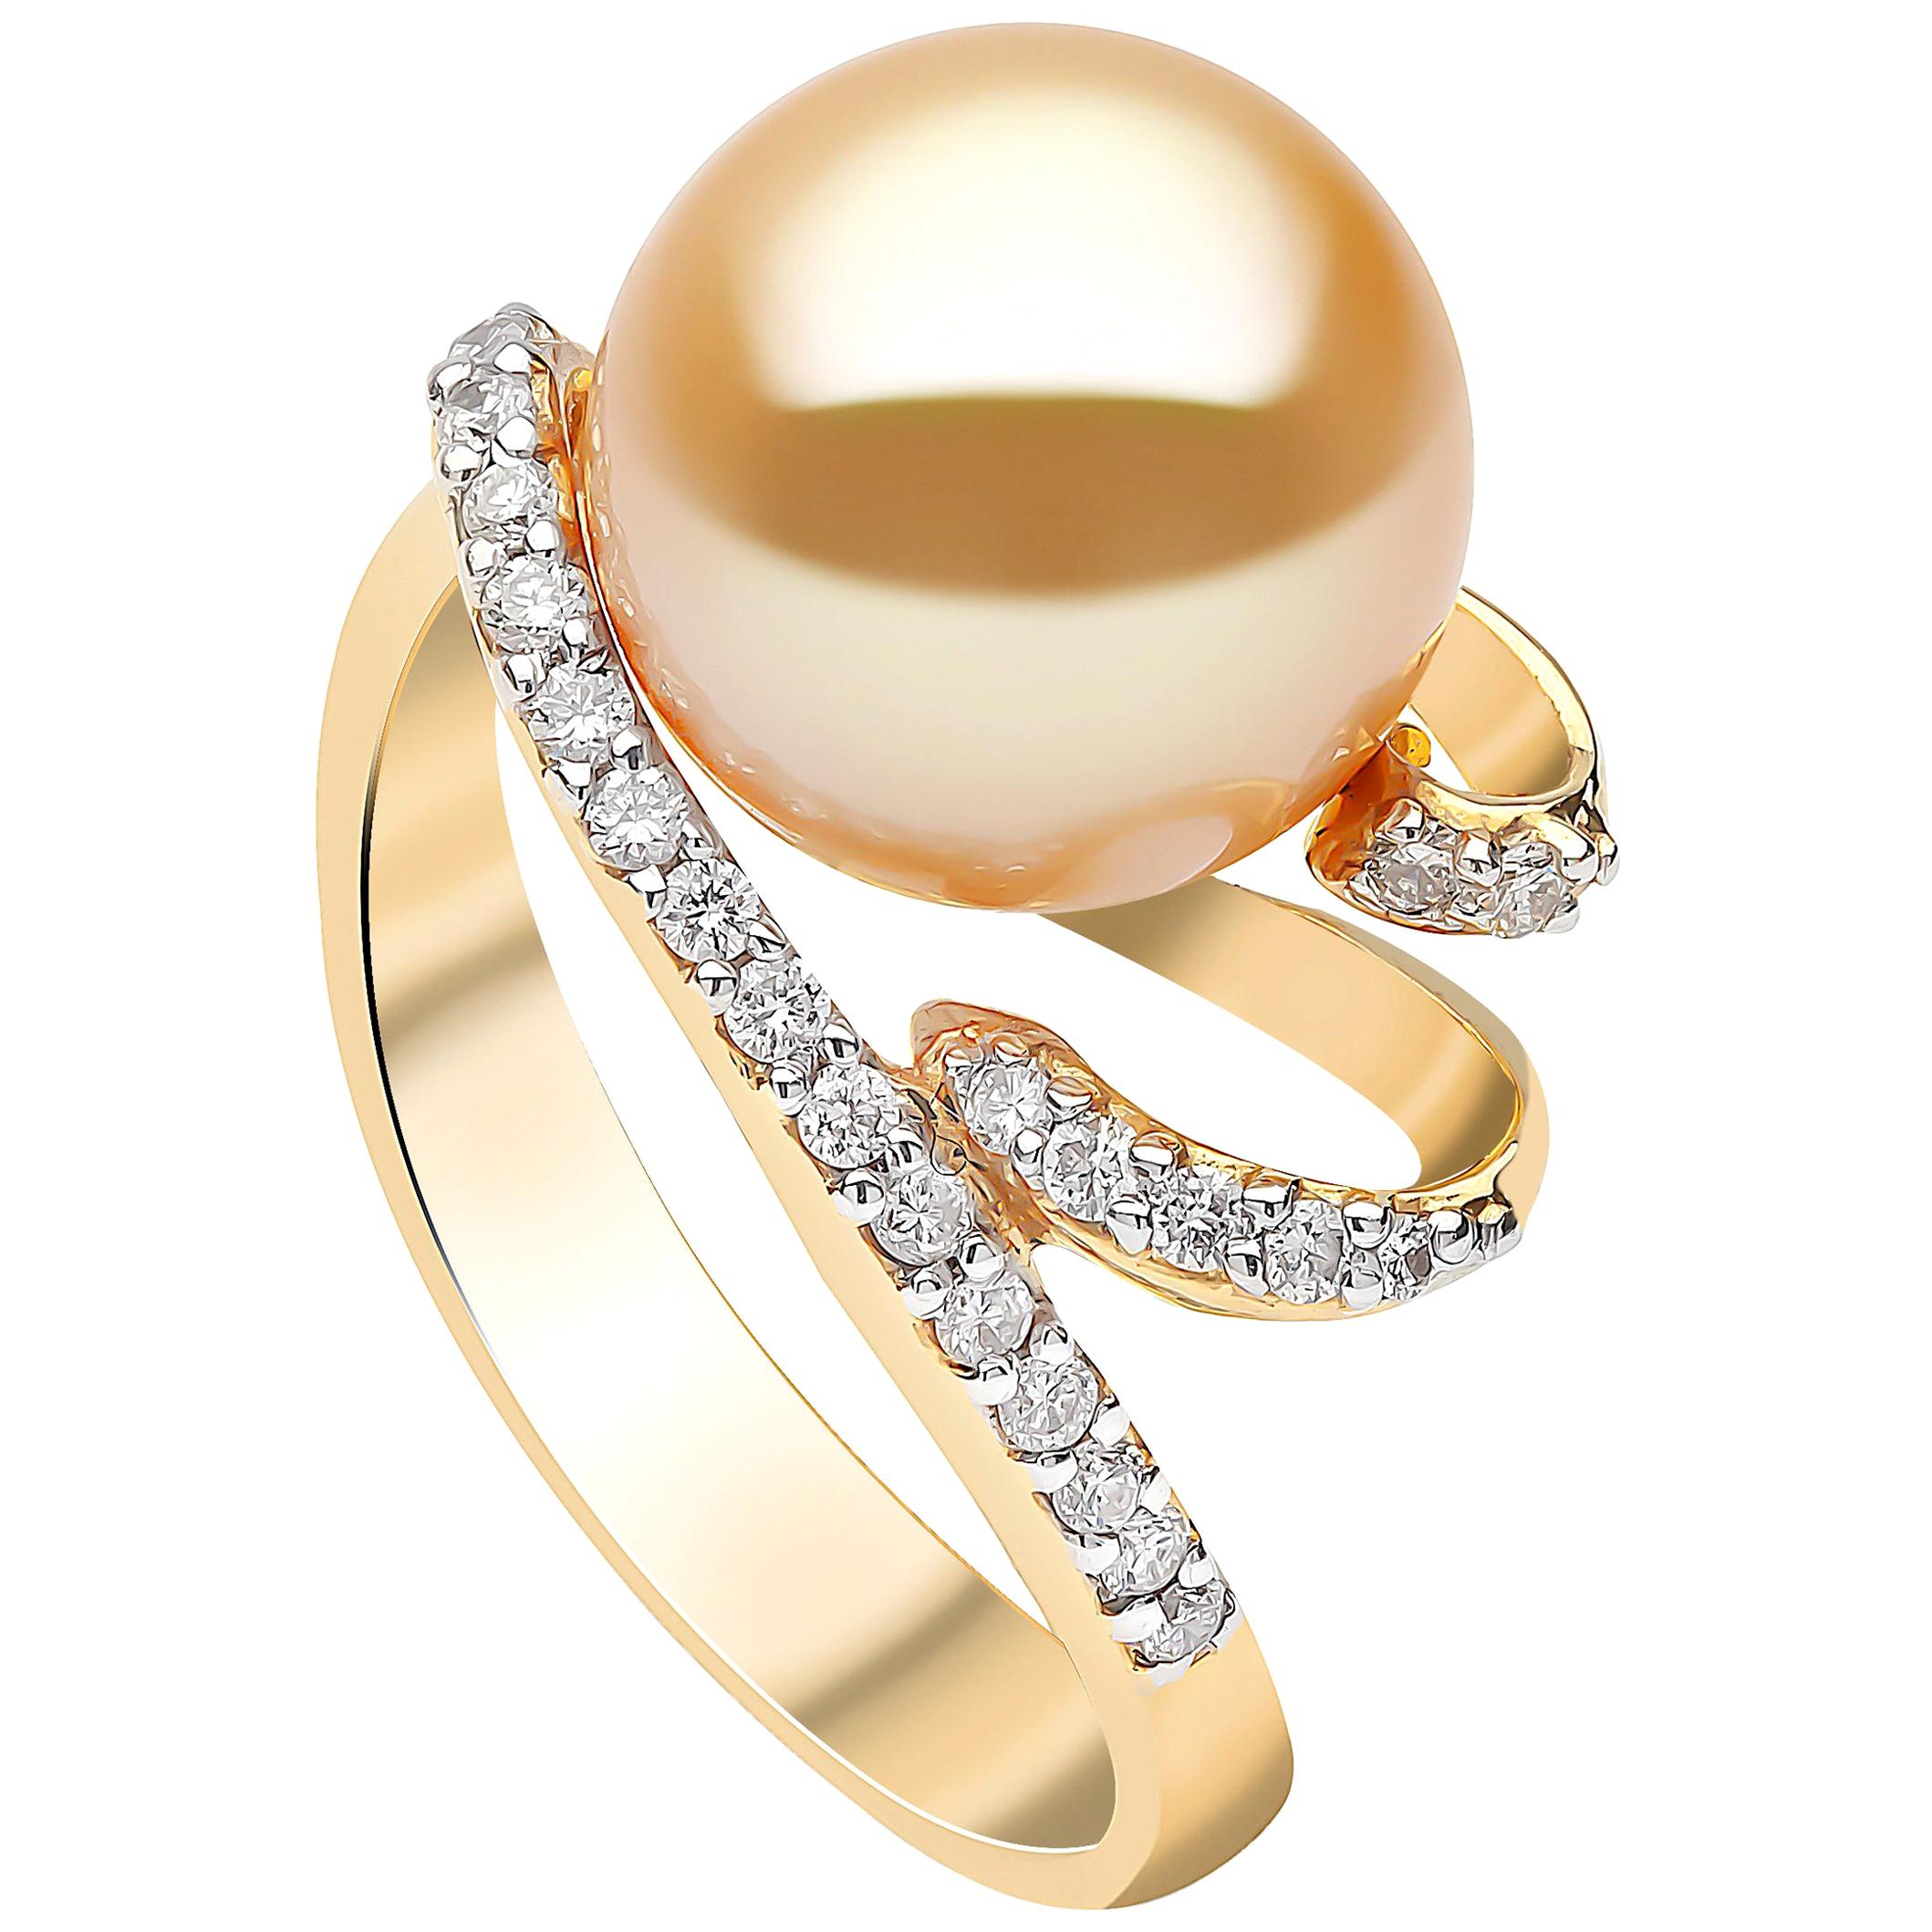 Yoko London Golden South Sea Pearl and Diamond Ring Set in 18 Karat Yellow Gold